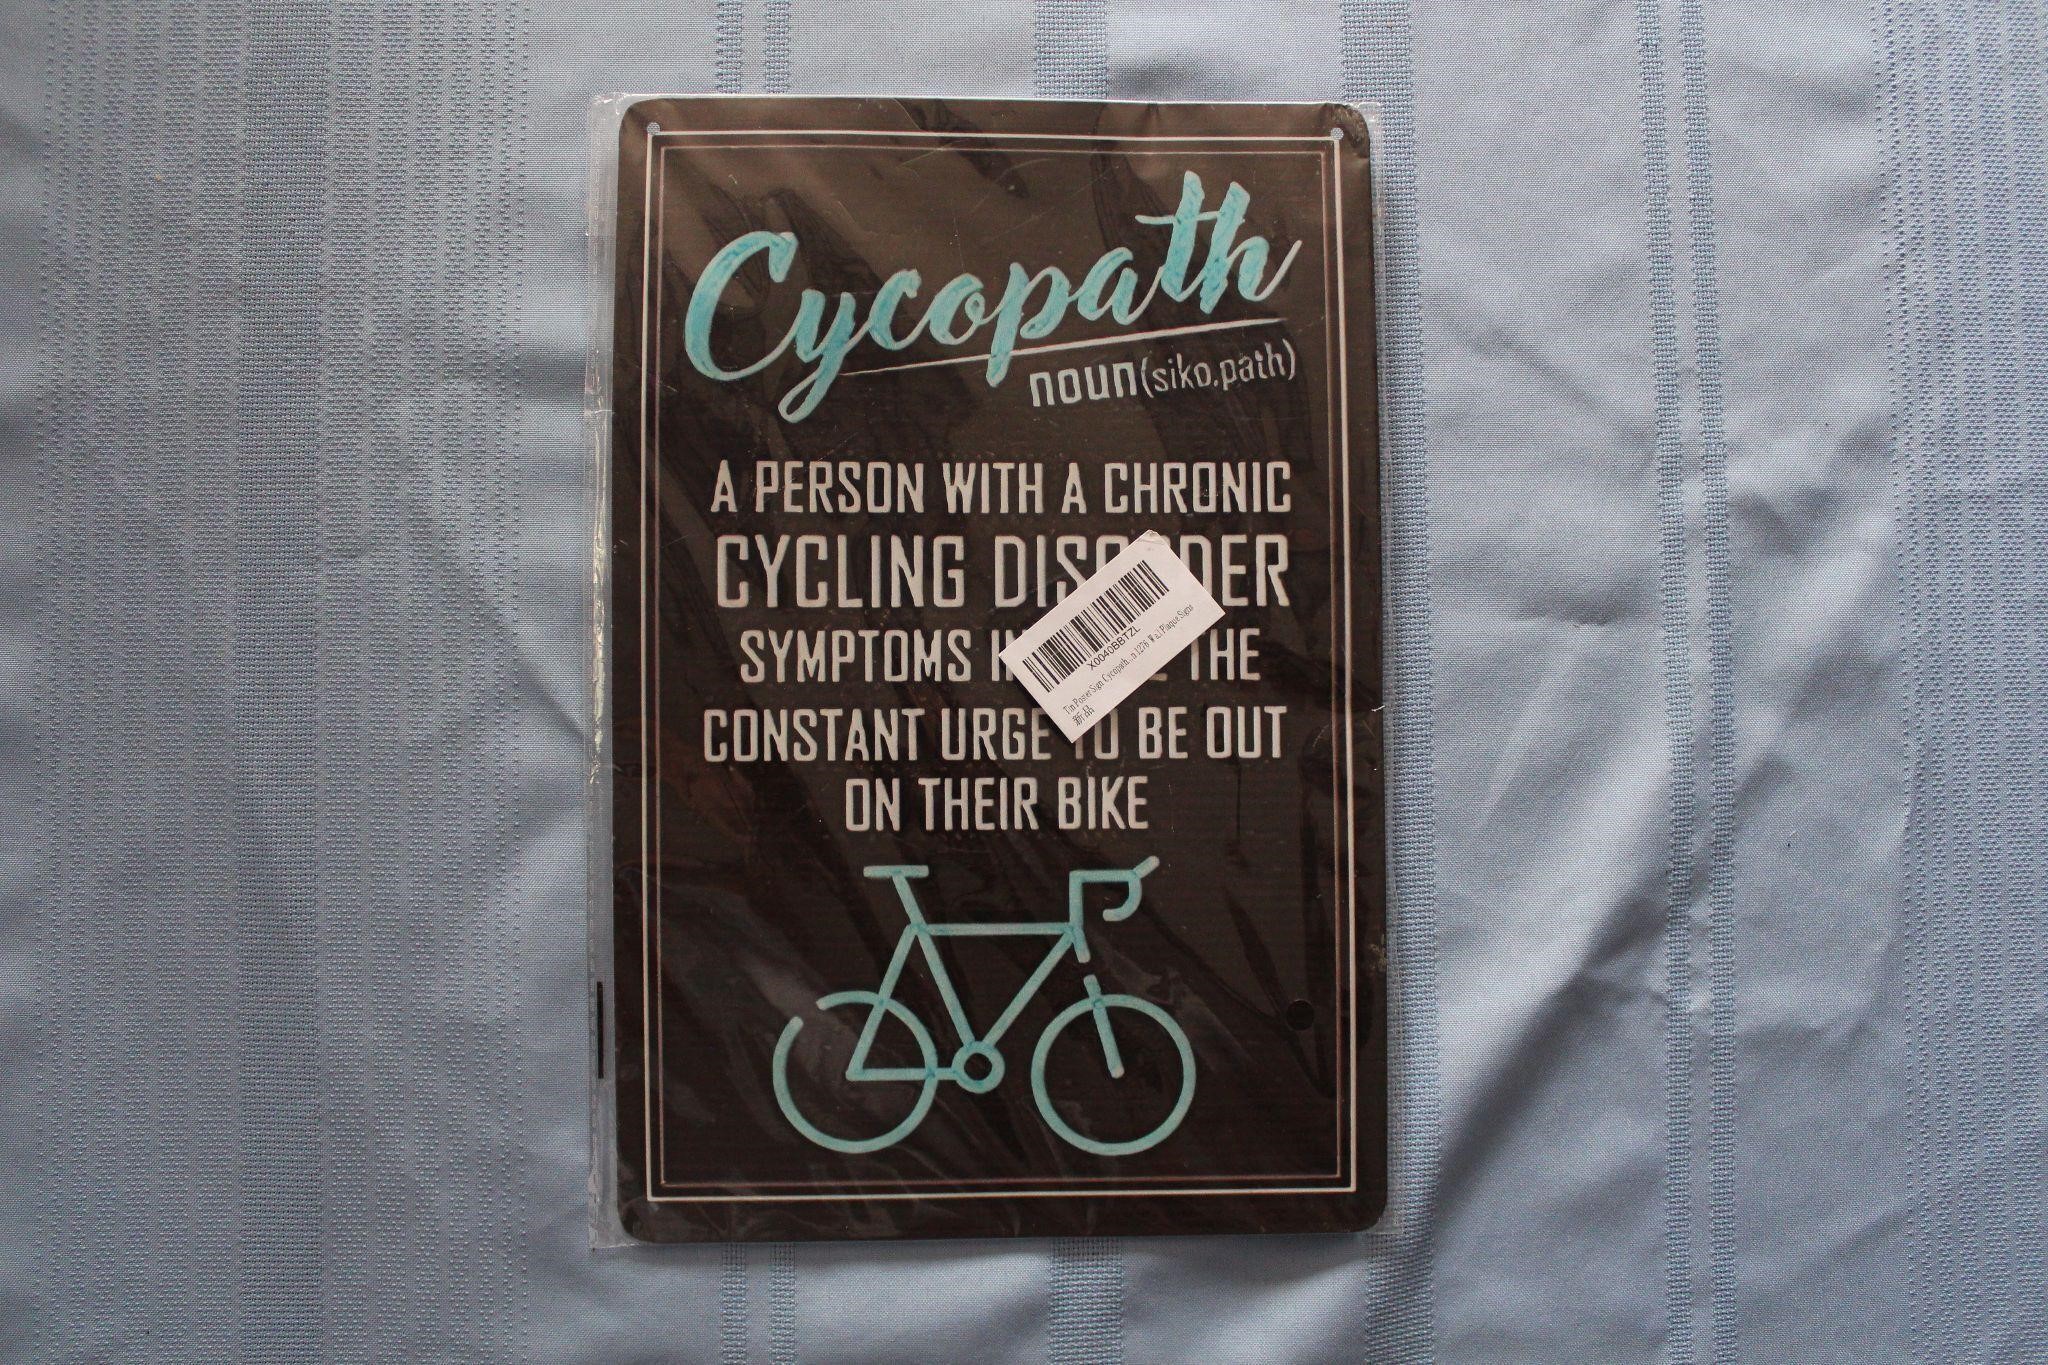 Retro Tin Sign: Cycopath...Cycling Disorder